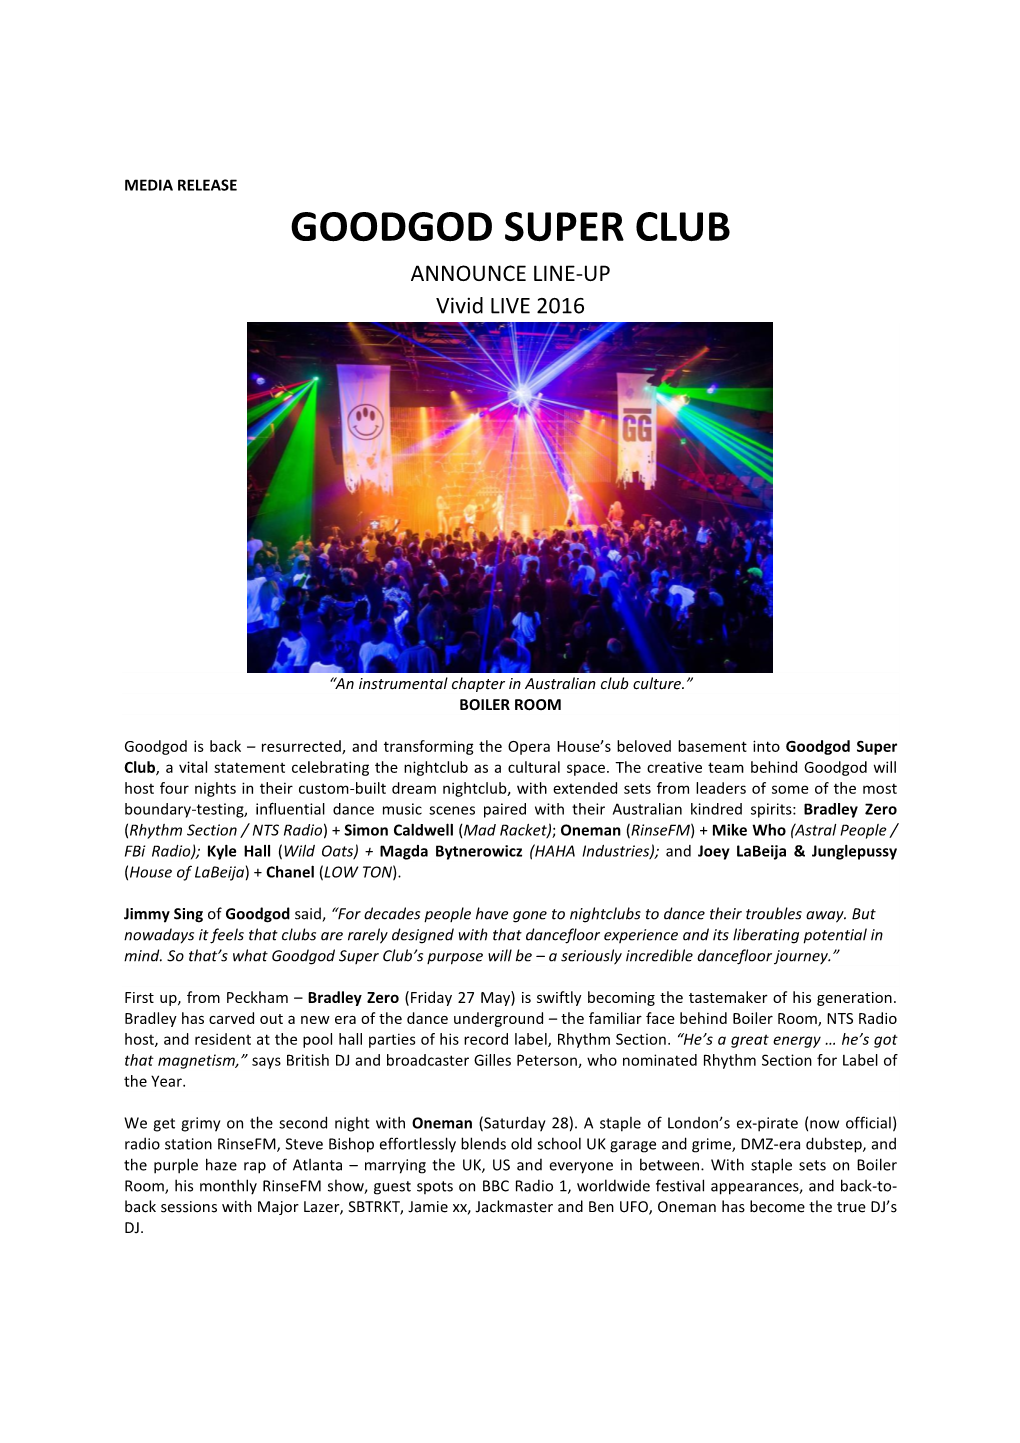 GOODGOD SUPER CLUB ANNOUNCE LINE-UP Vivid LIVE 2016